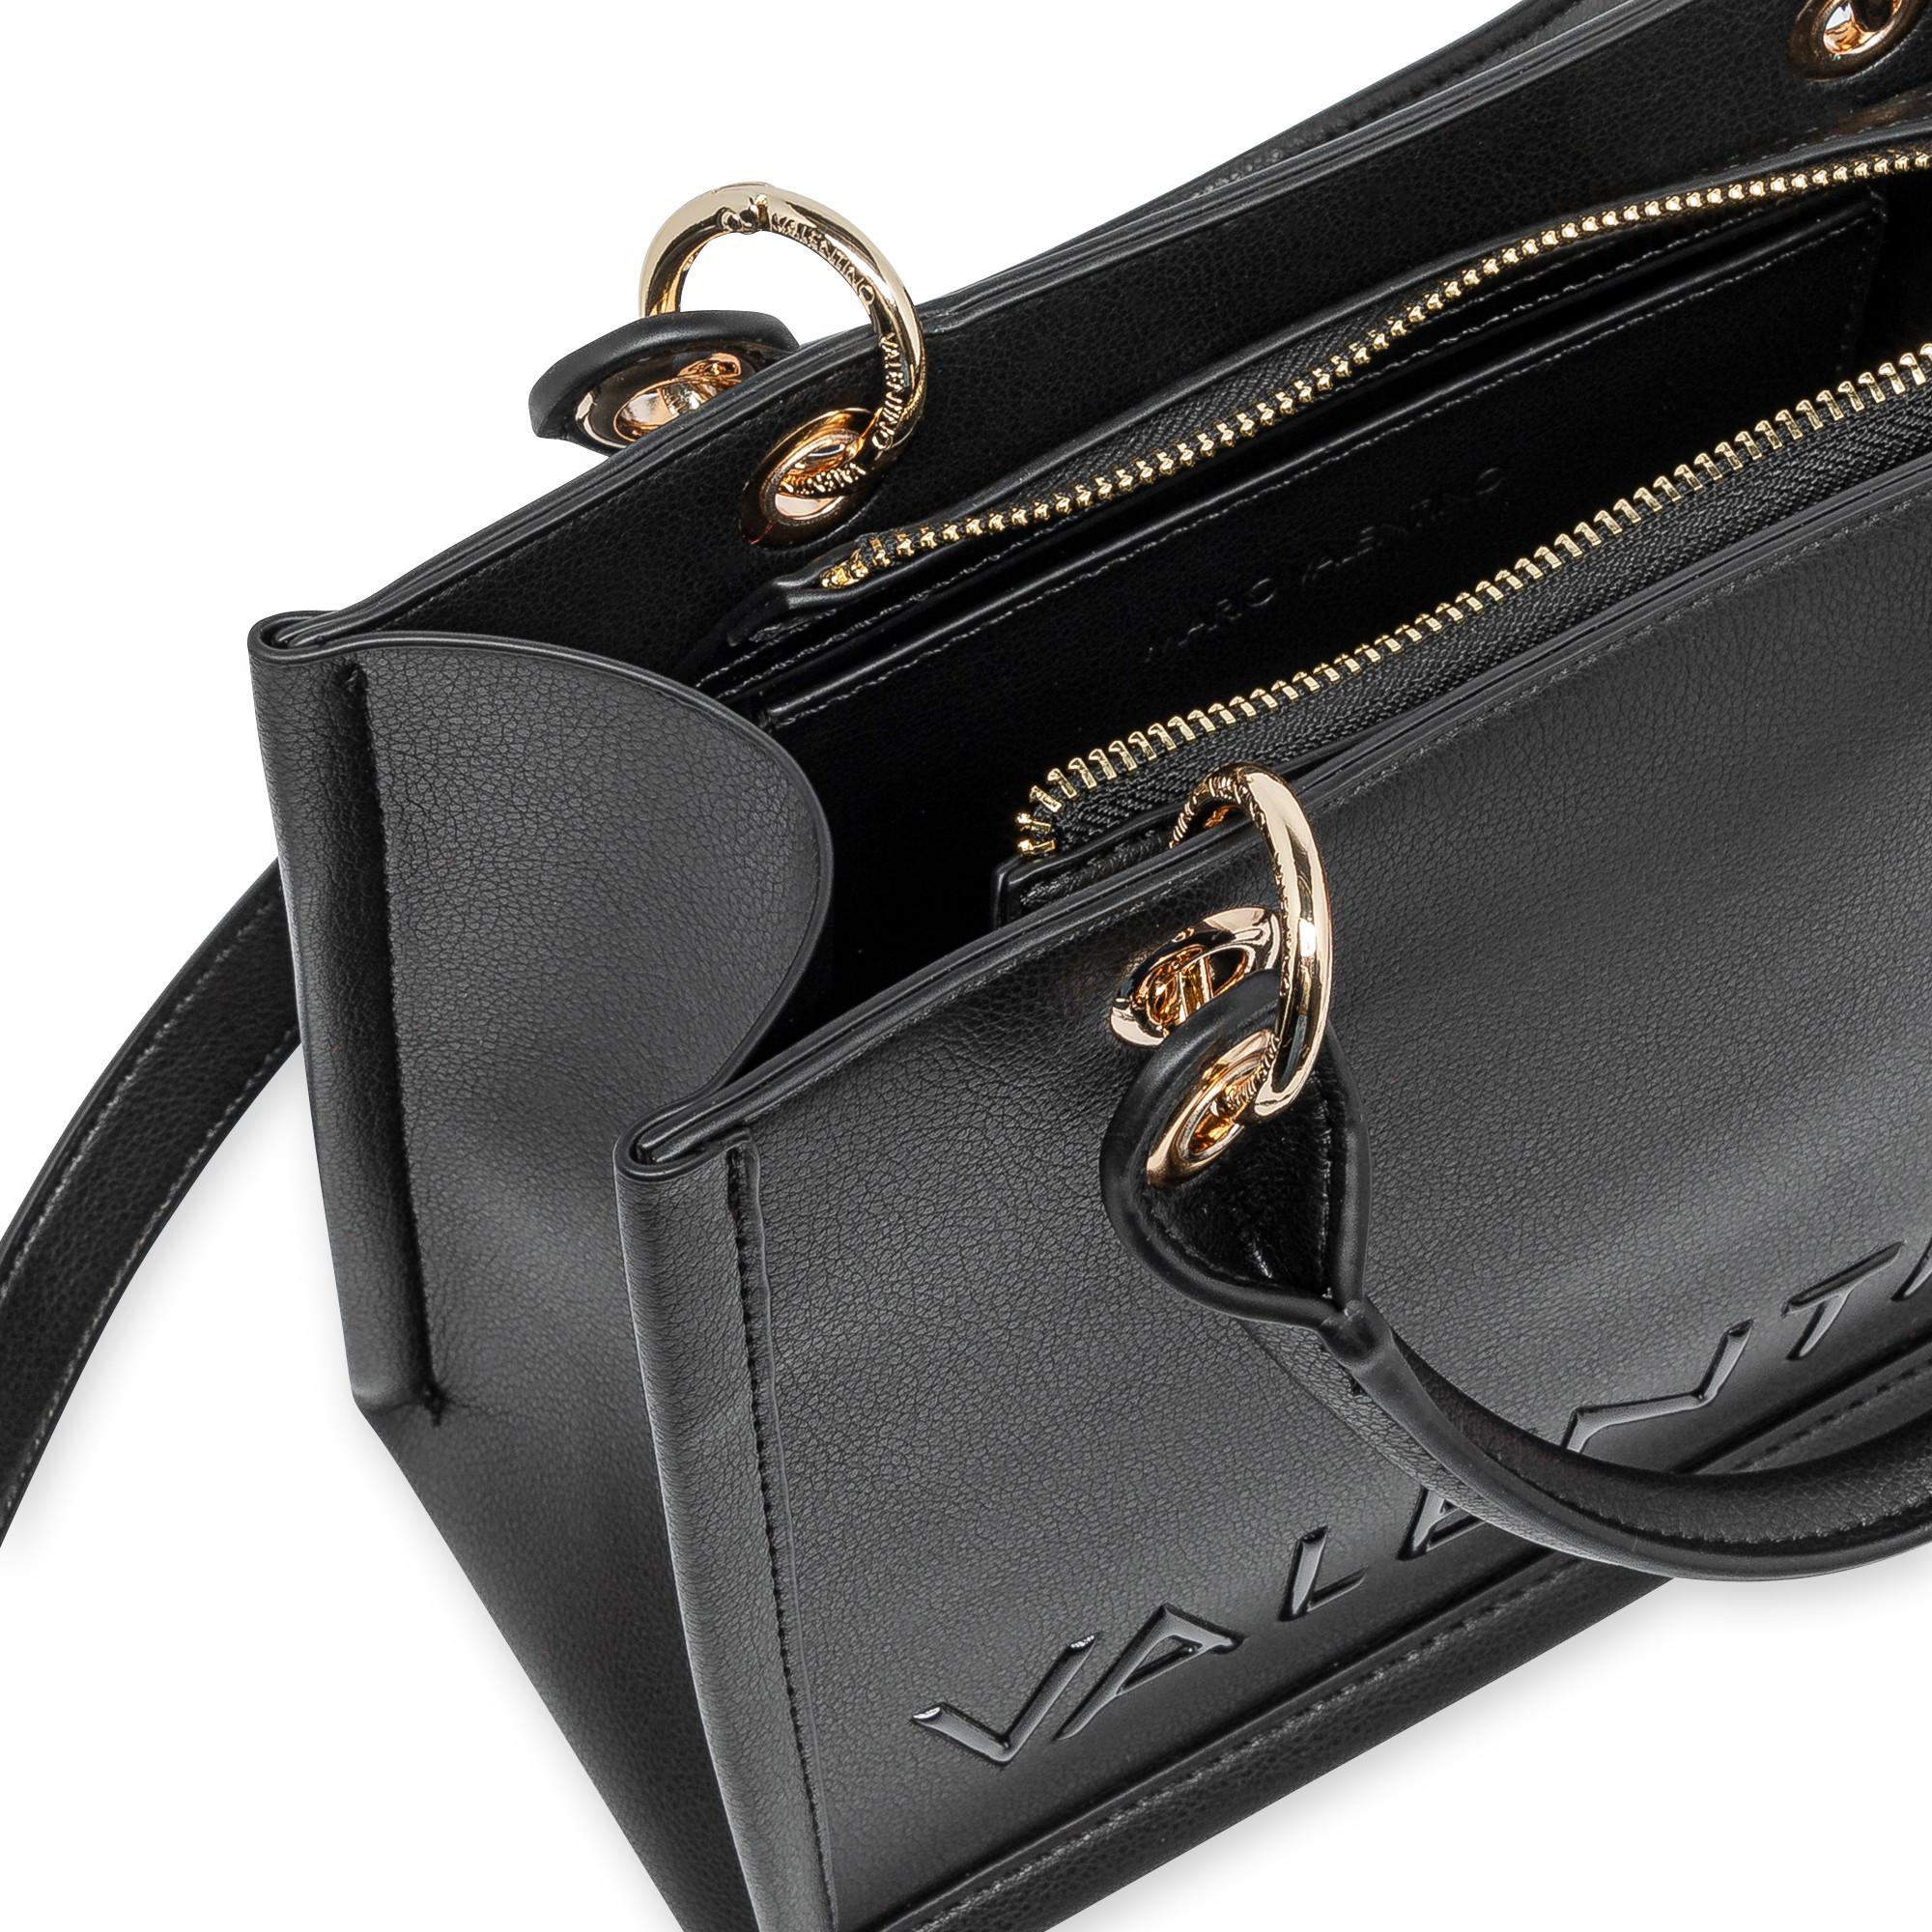 Valentino Handbags Pigalle Tote-Bag 